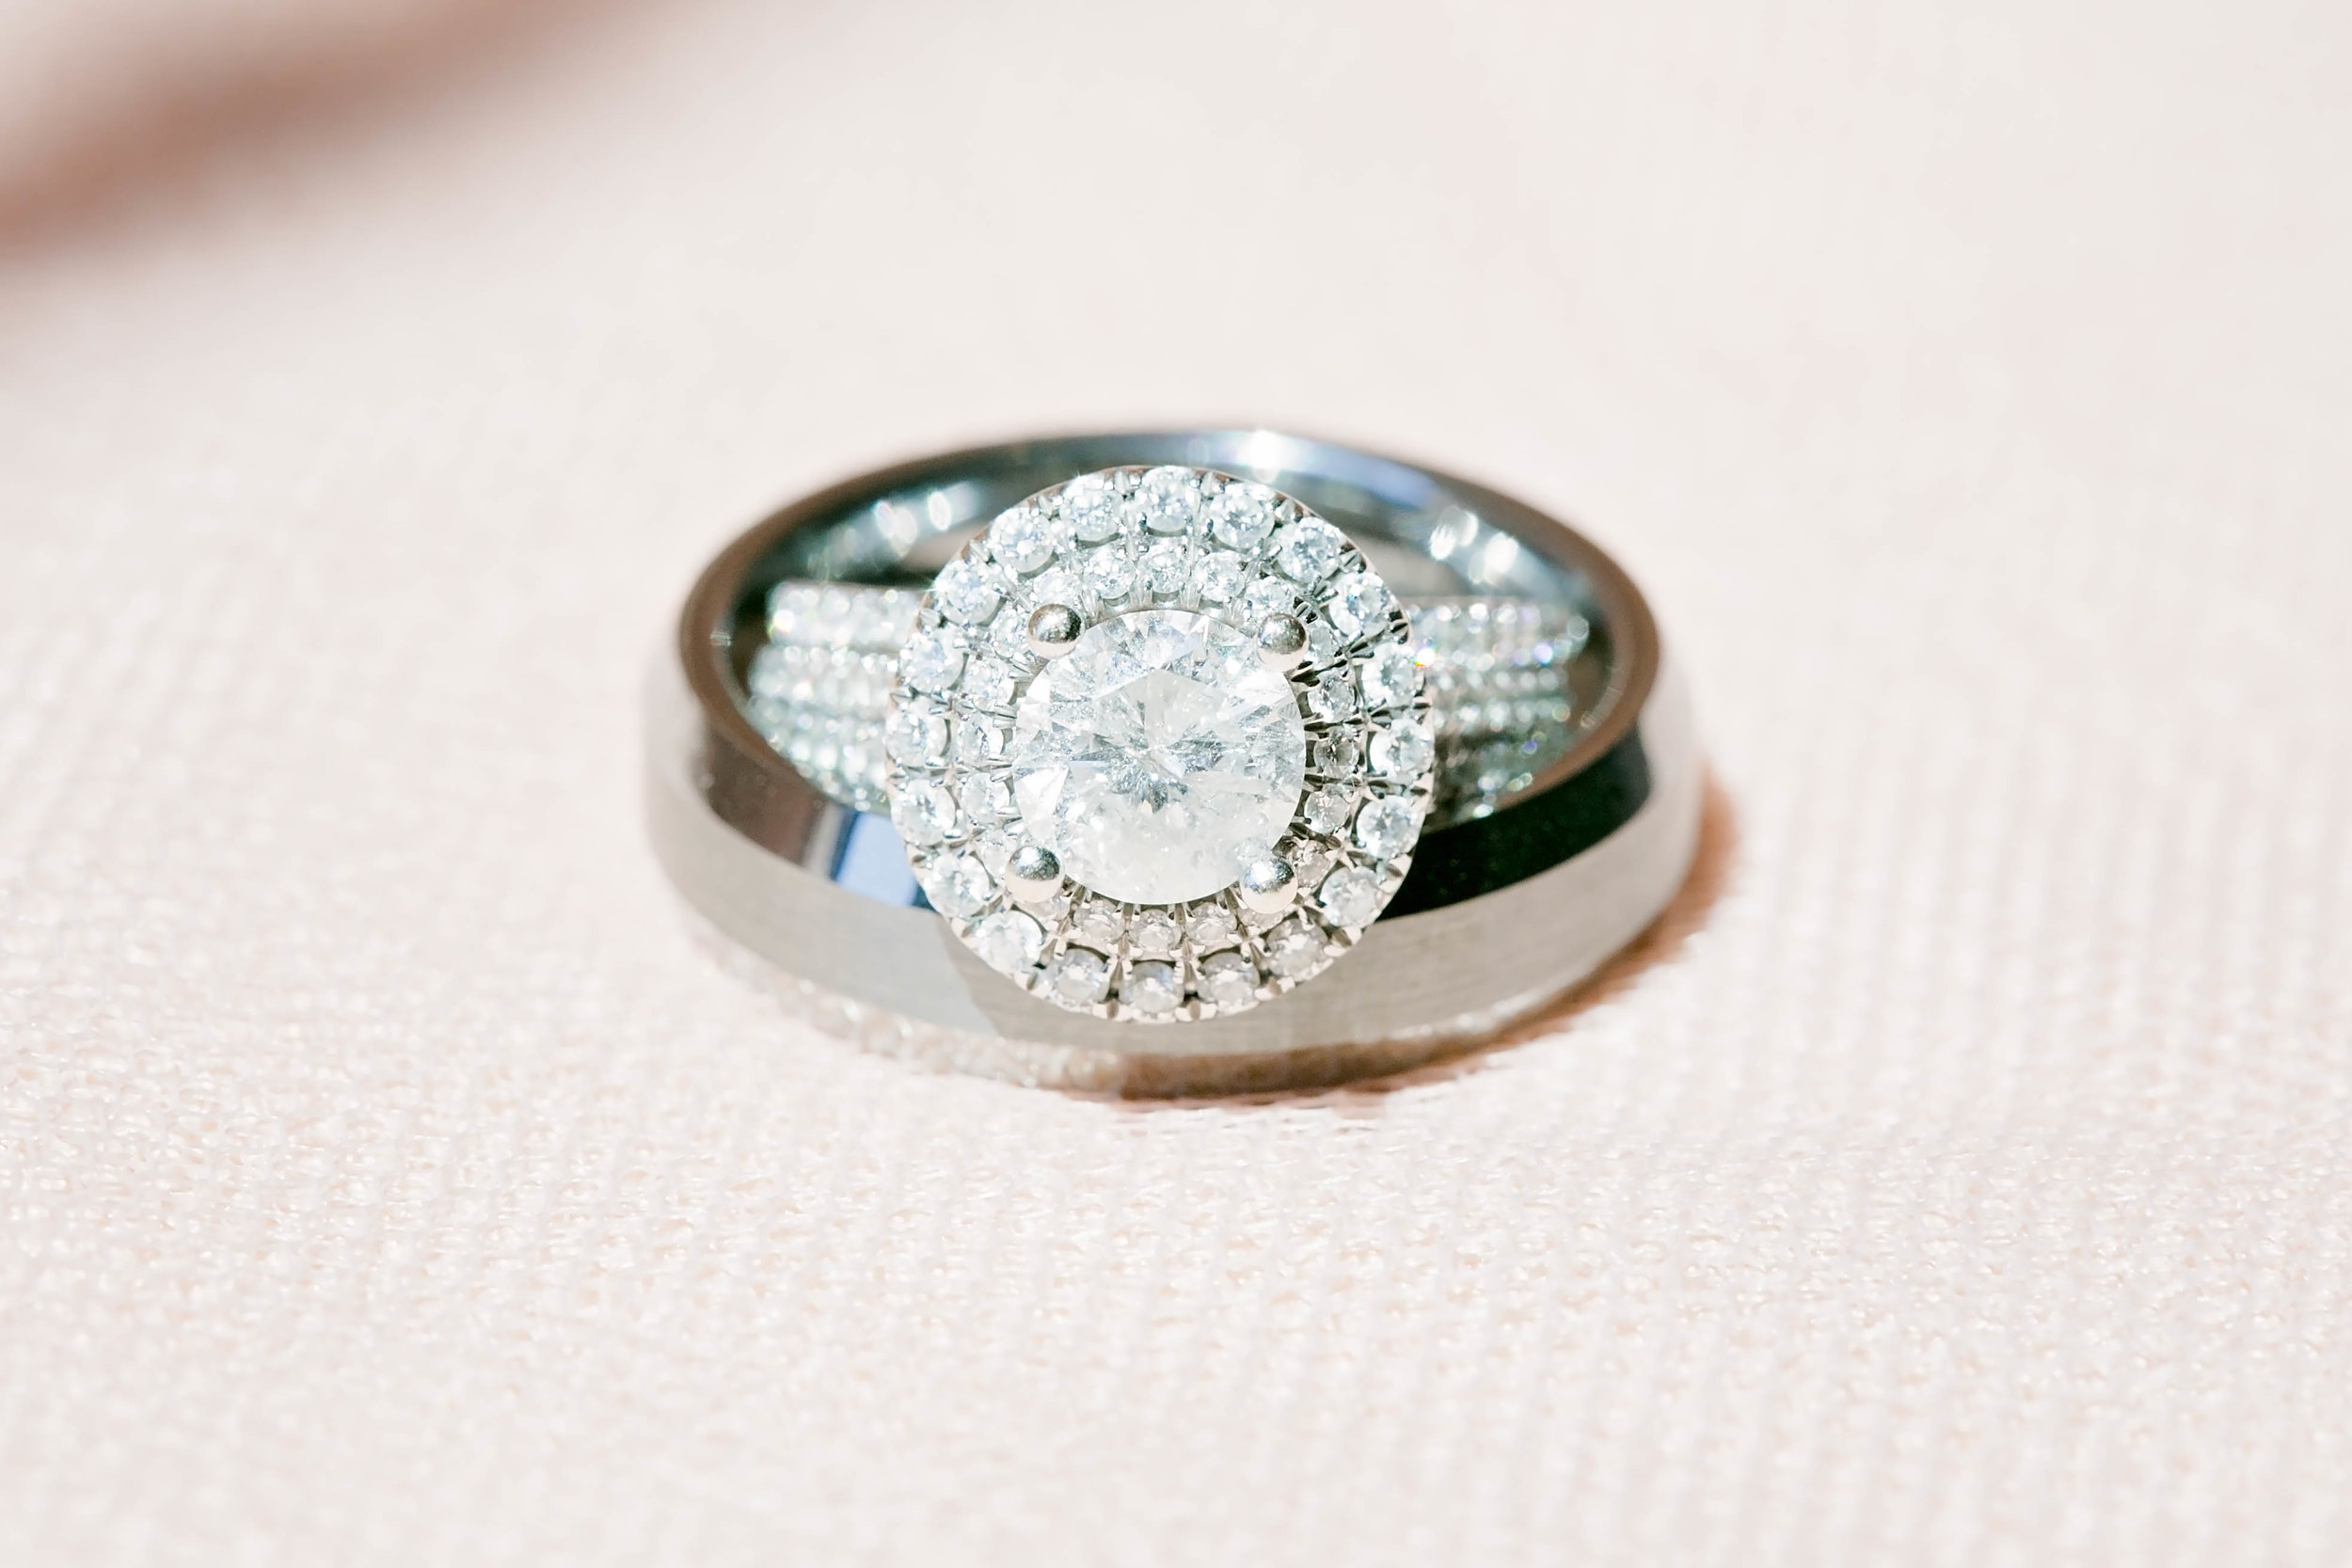 Ring shot, Engagement ring, wedding bands, wedding details